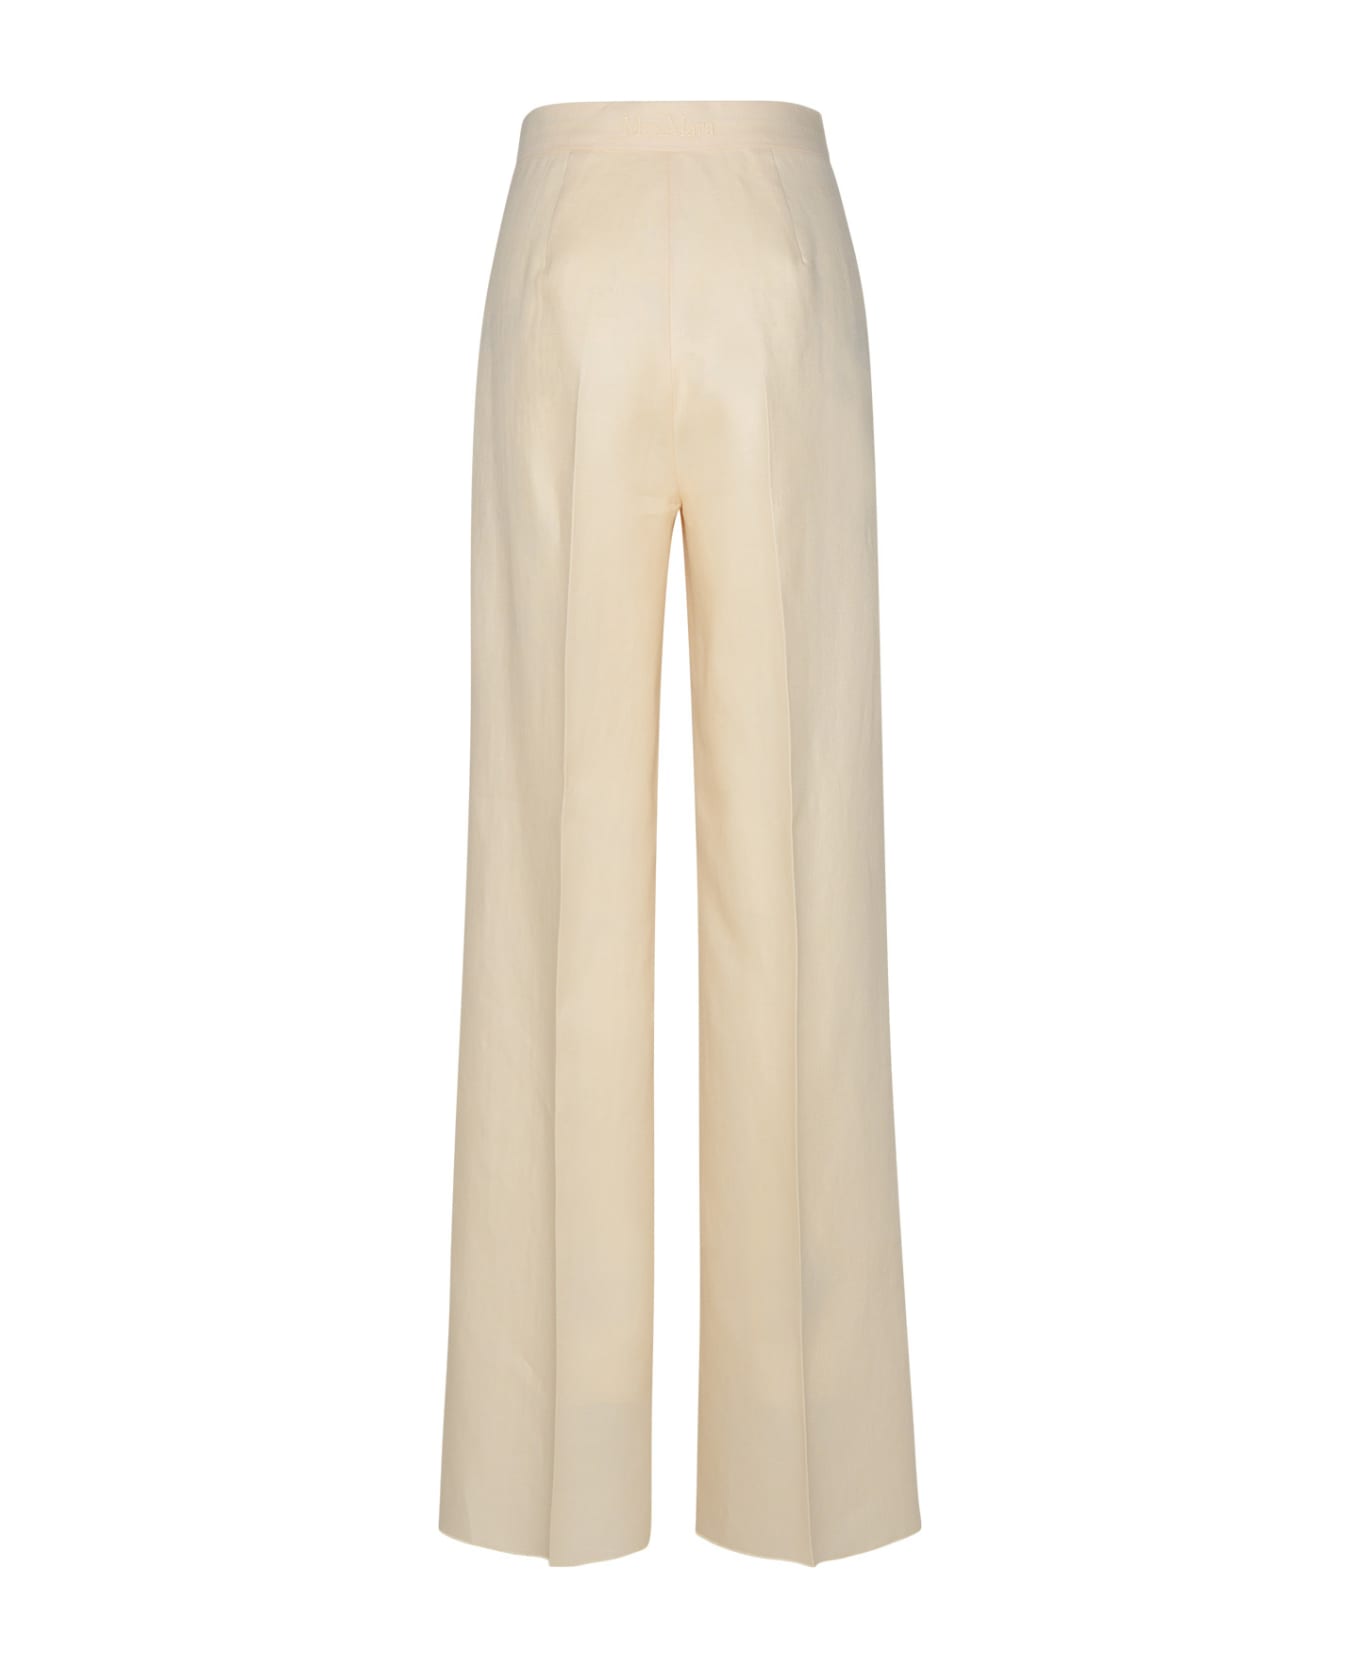 Max Mara 'hangar' Ivory Linen Pants - Ivory